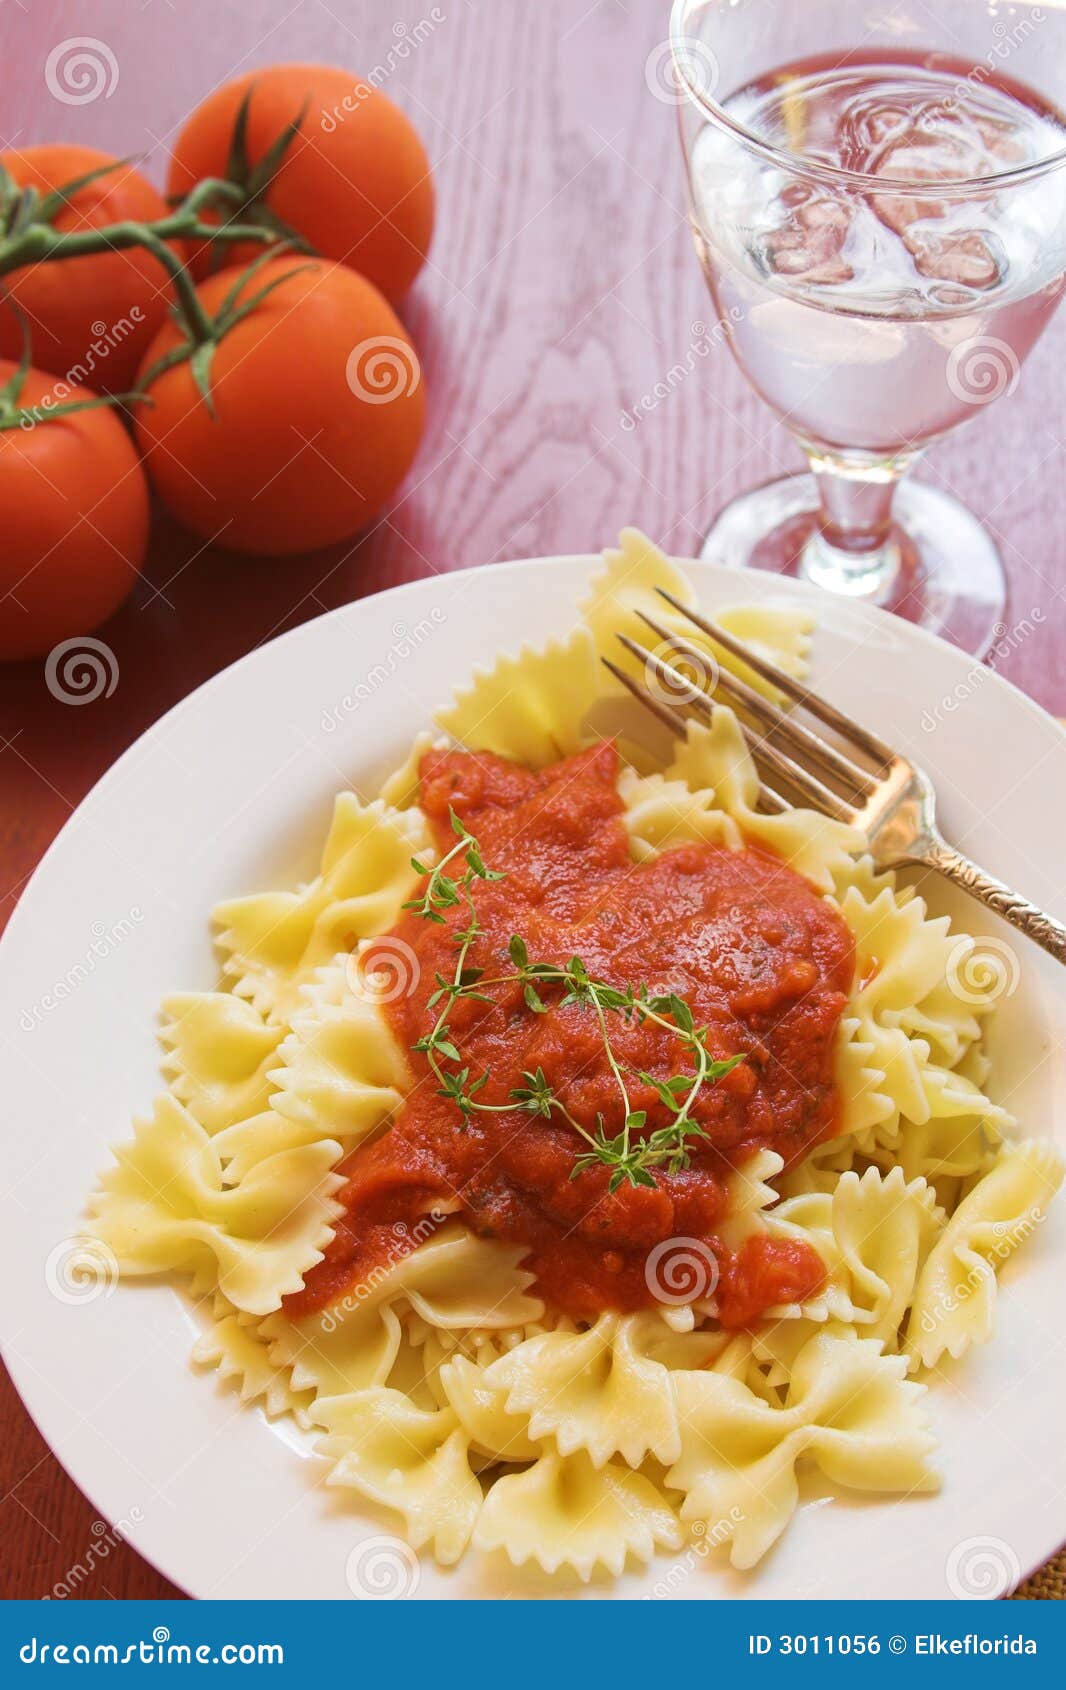 pasta dinner